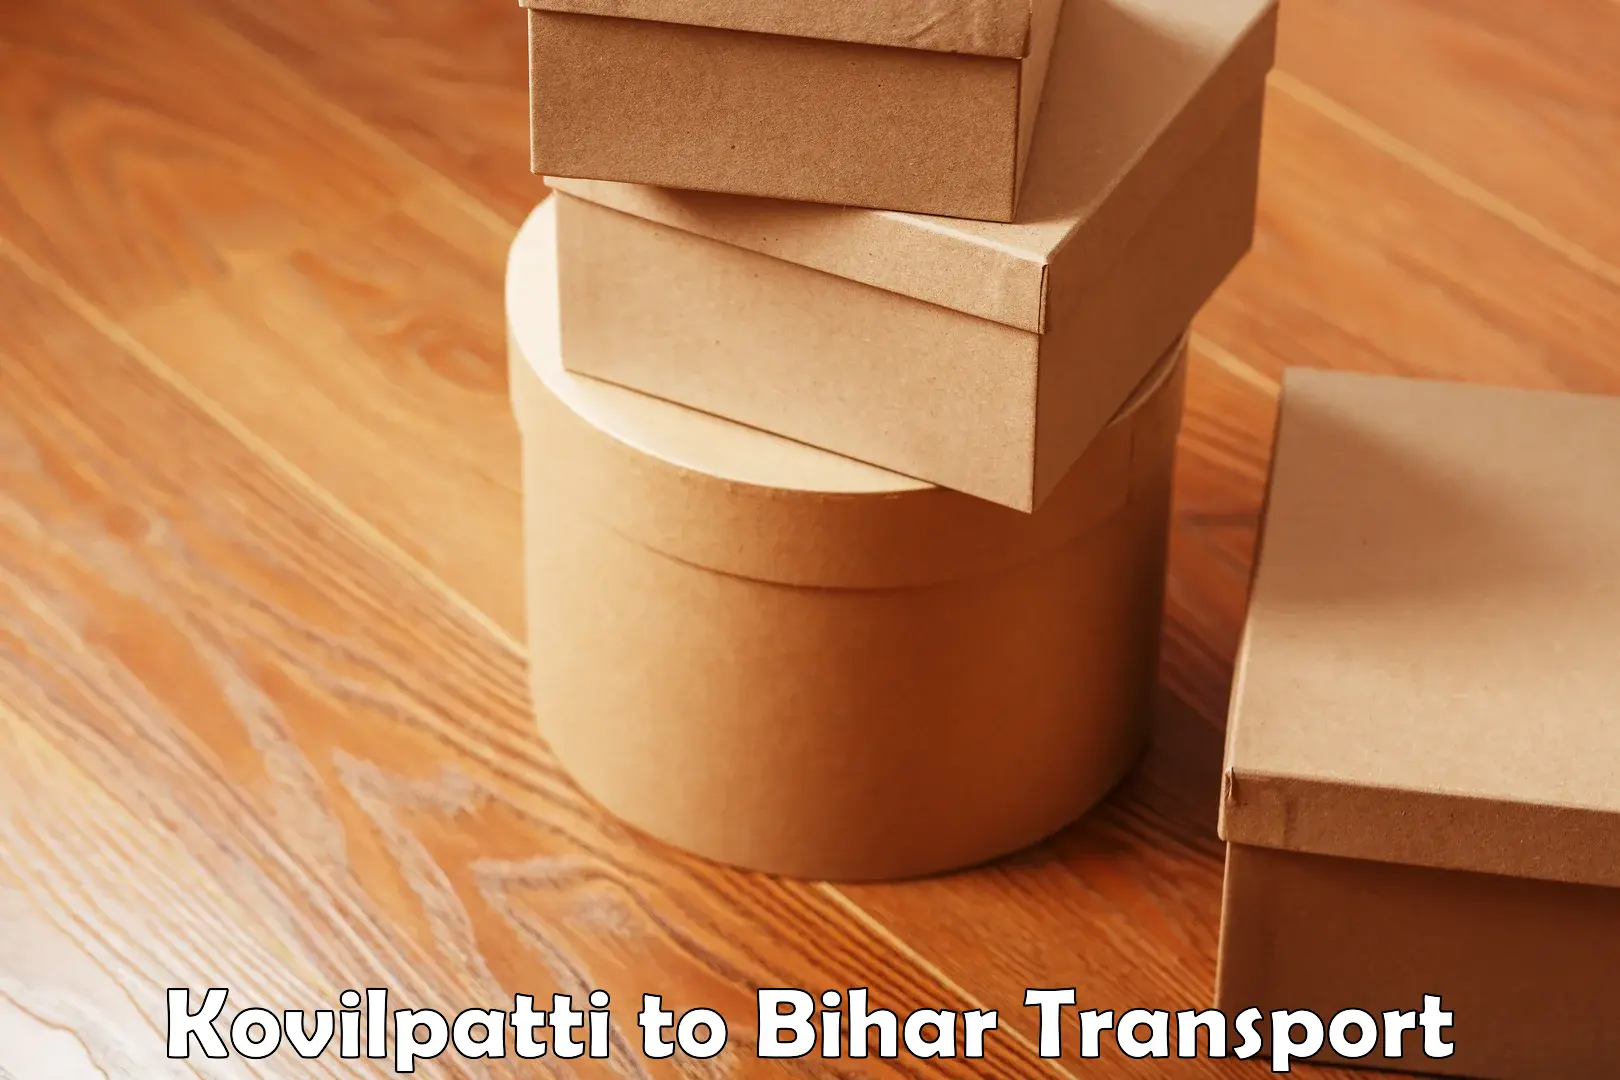 Truck transport companies in India Kovilpatti to Goh Aurangabad